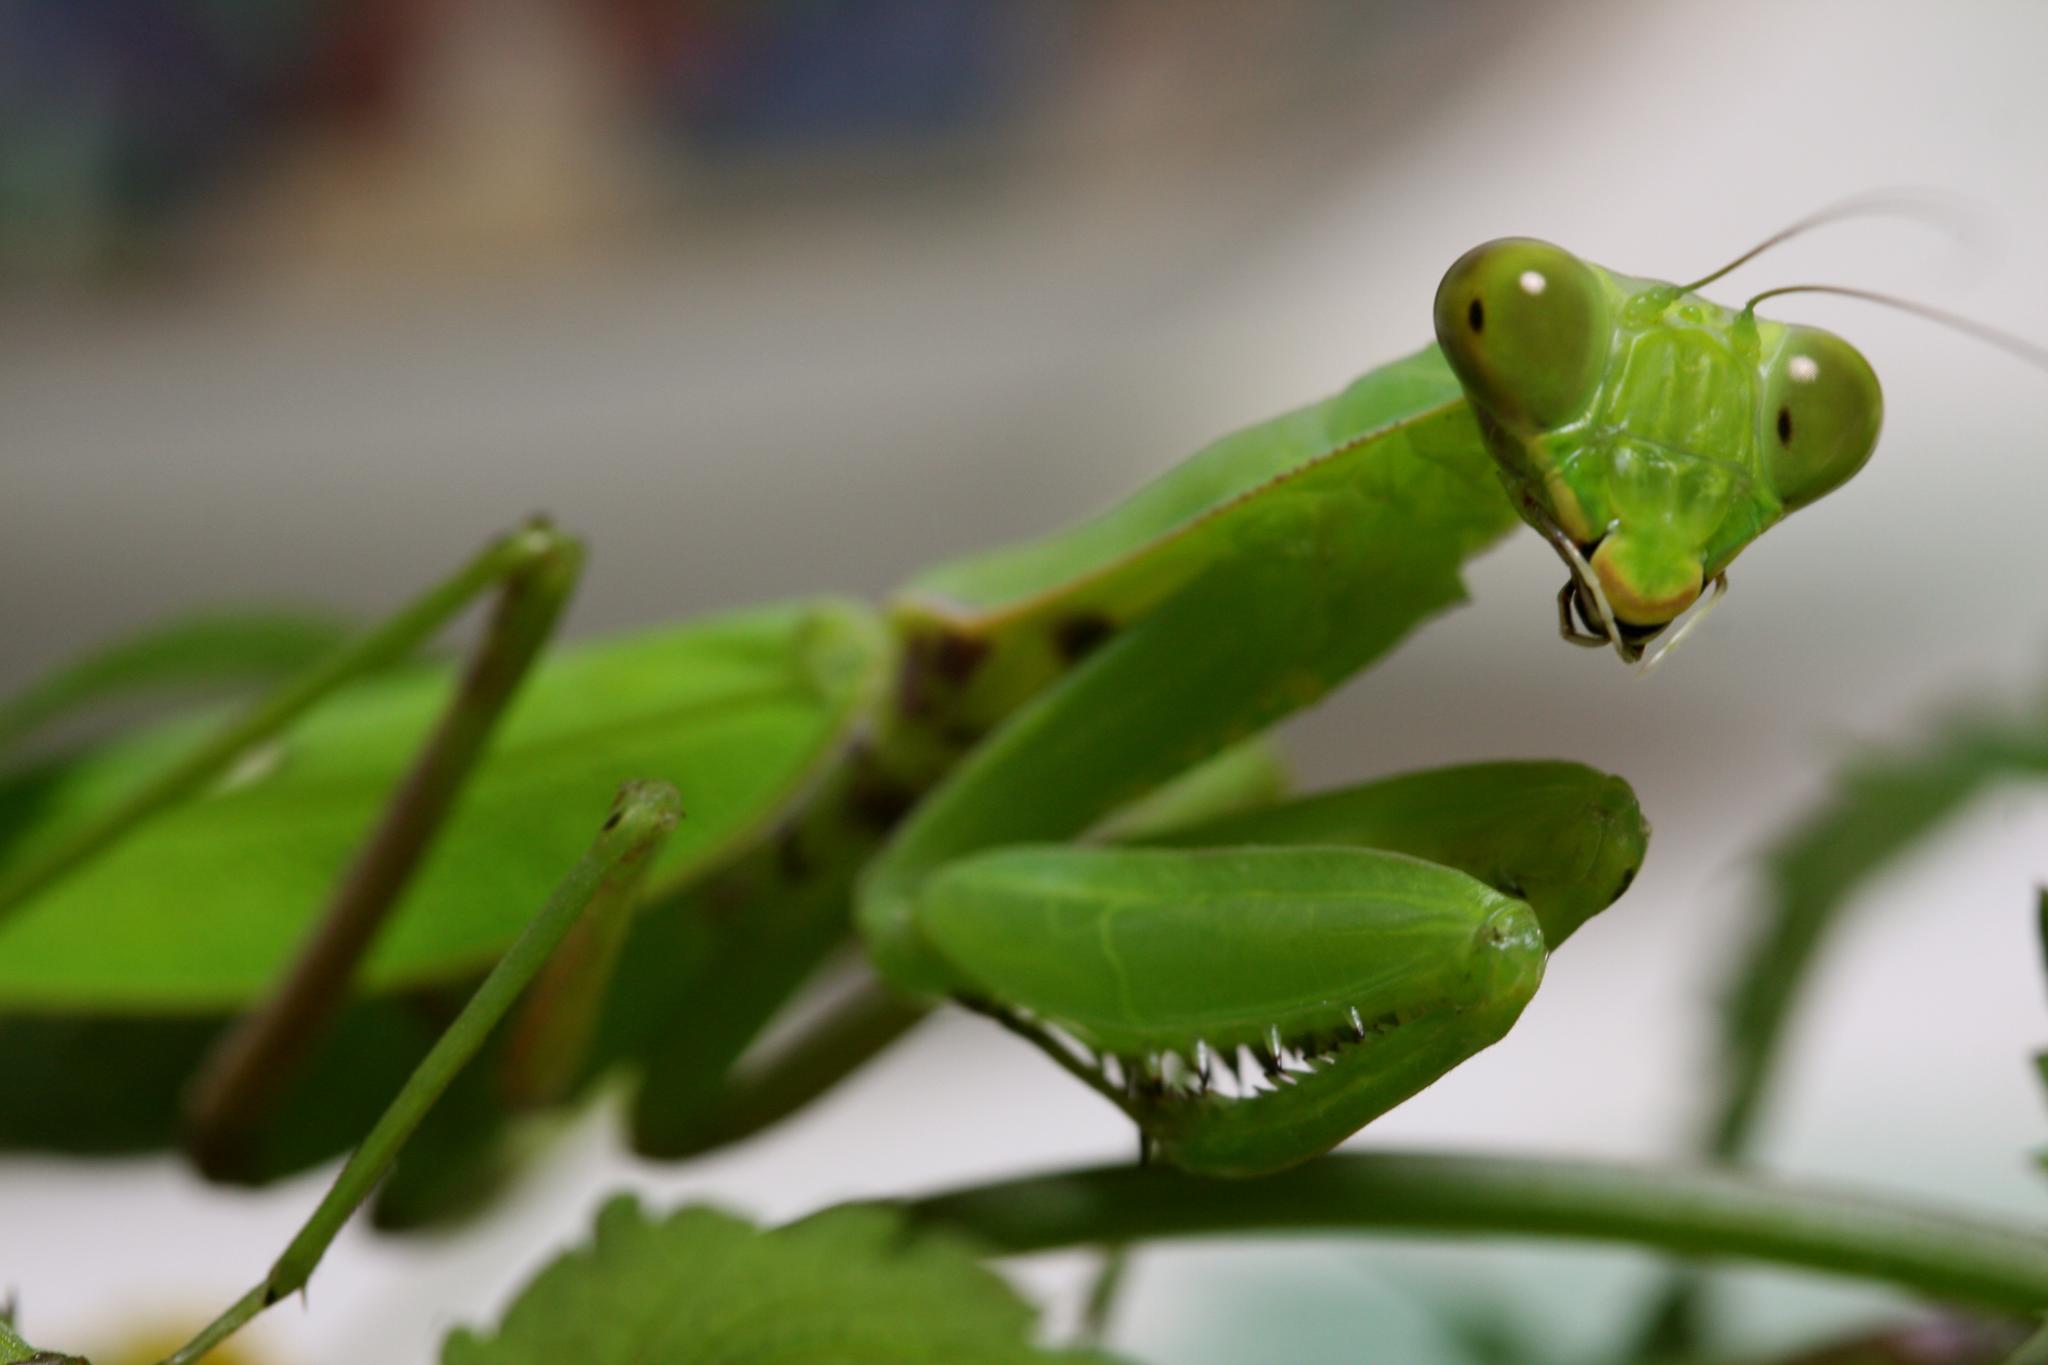 the praying mantissa sits on the leaf